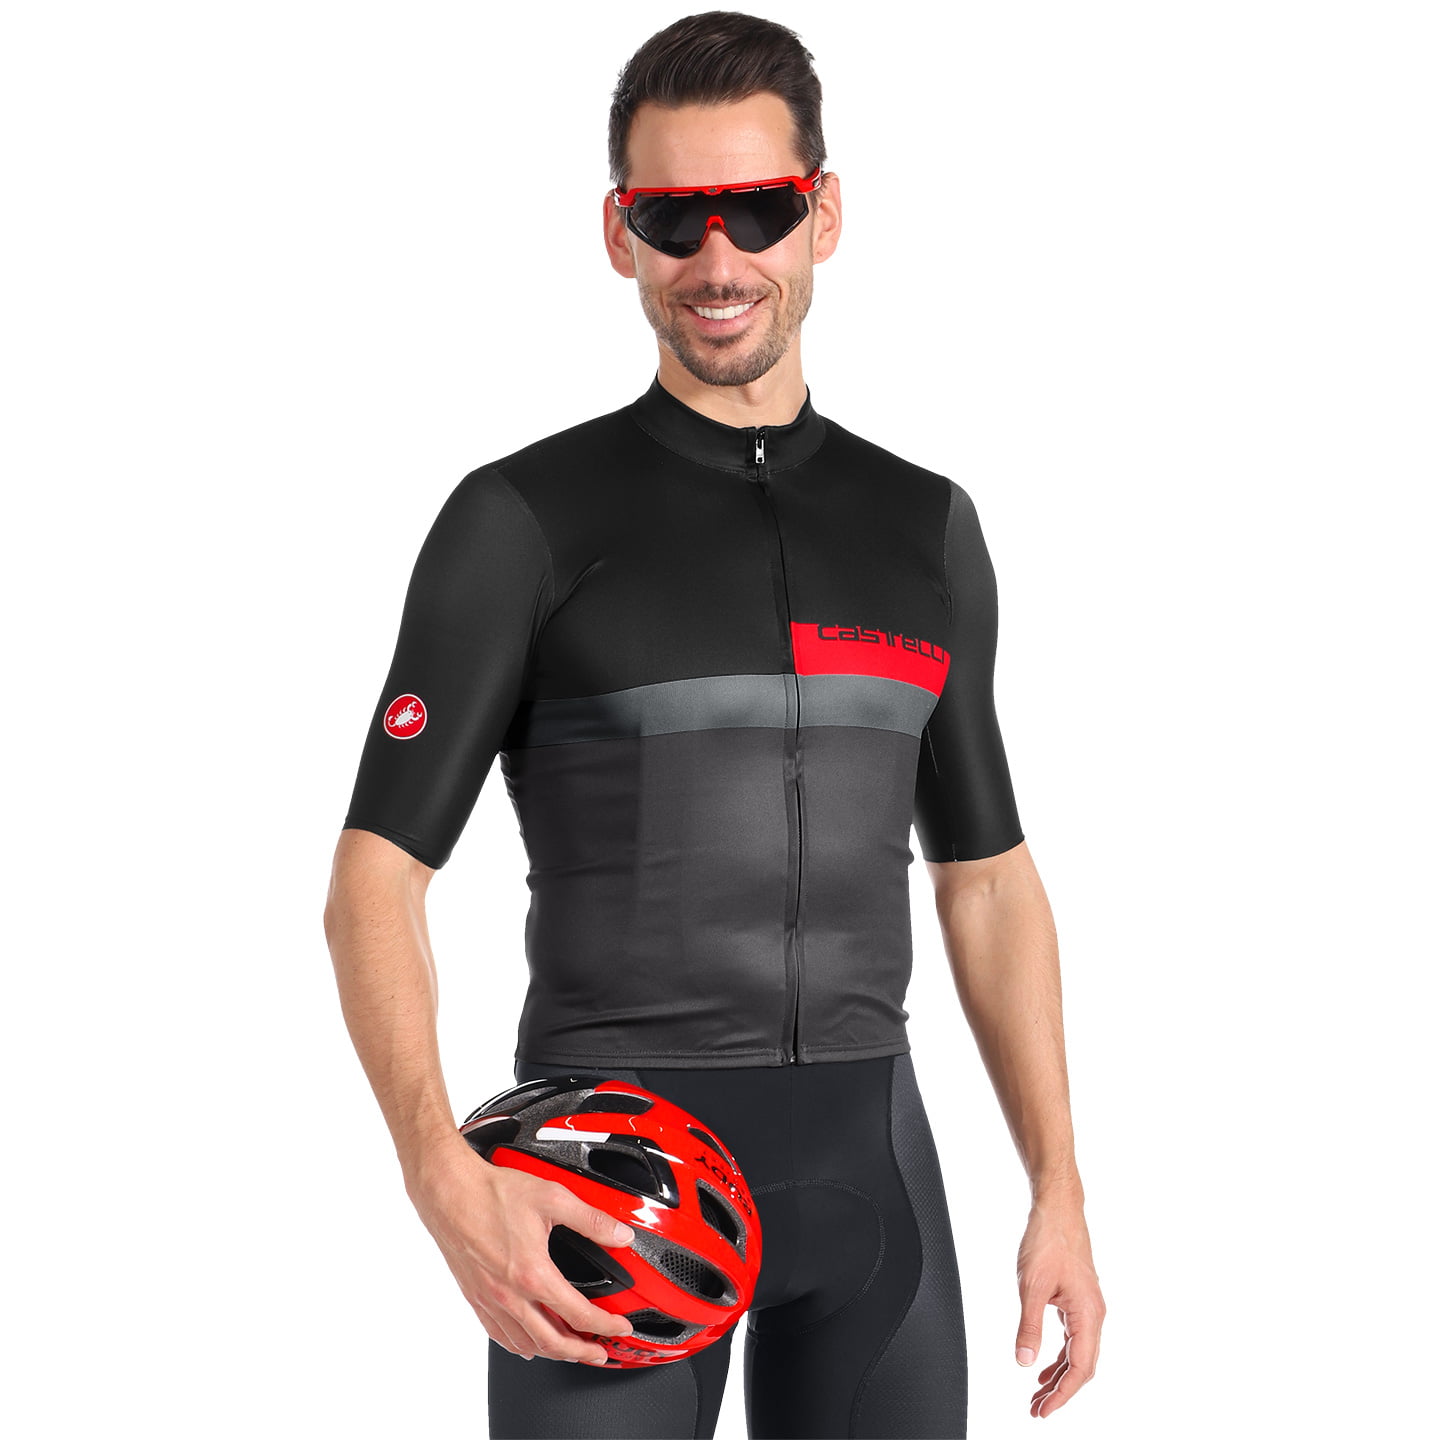 CASTELLI A Blocco Short Sleeve Jersey Short Sleeve Jersey, for men, size S, Cycling jersey, Cycling clothing